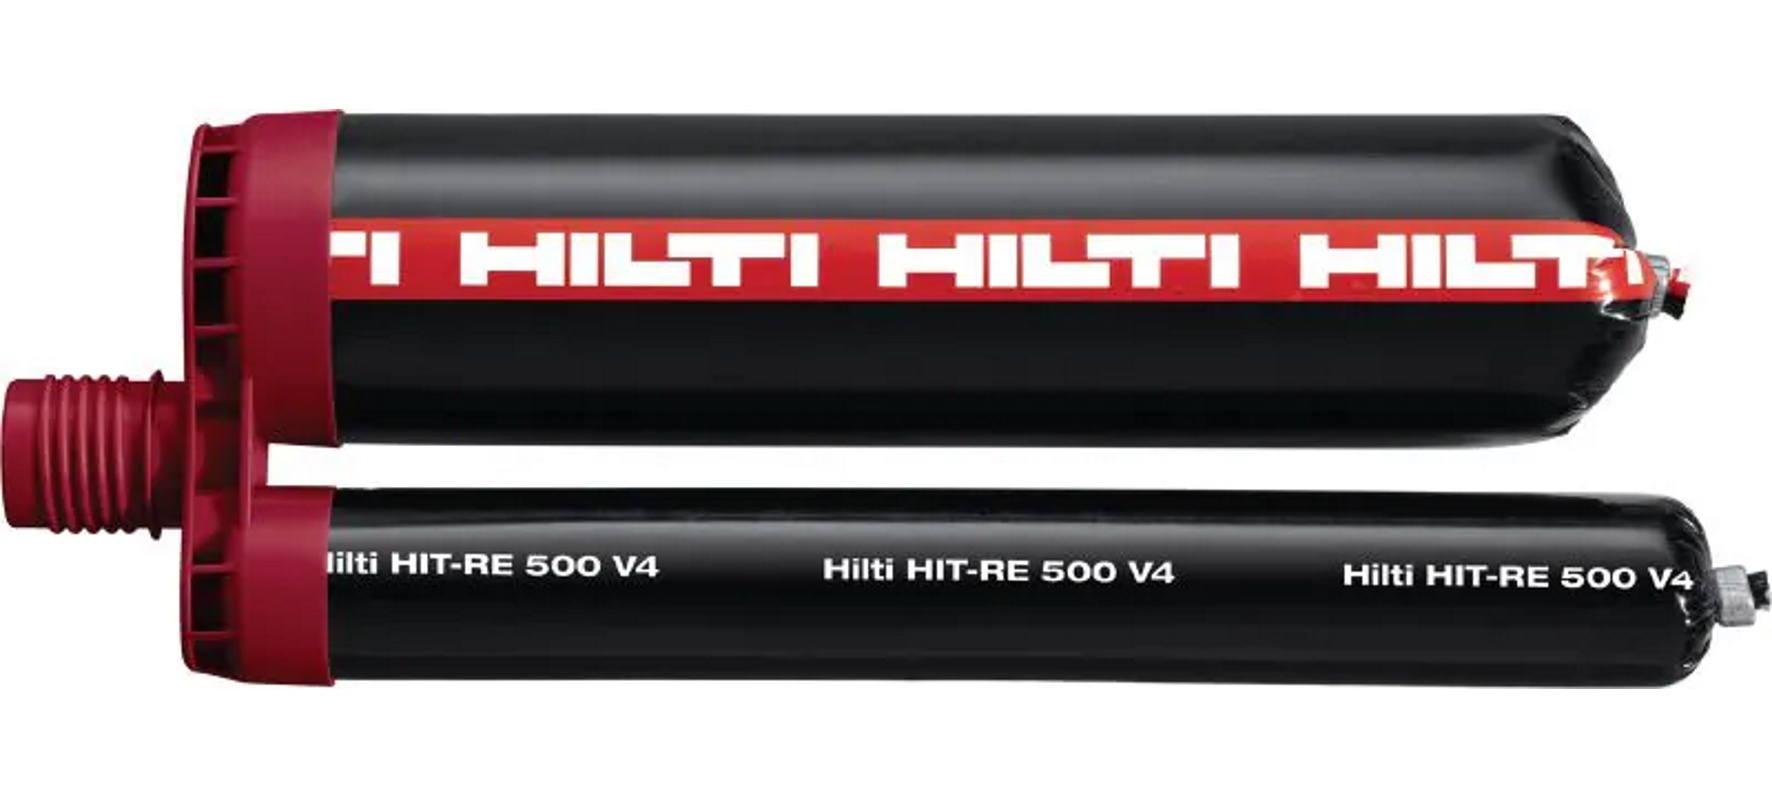 Химический анкер Хилти HIT-RE 500 V4/500 объём 0.5л